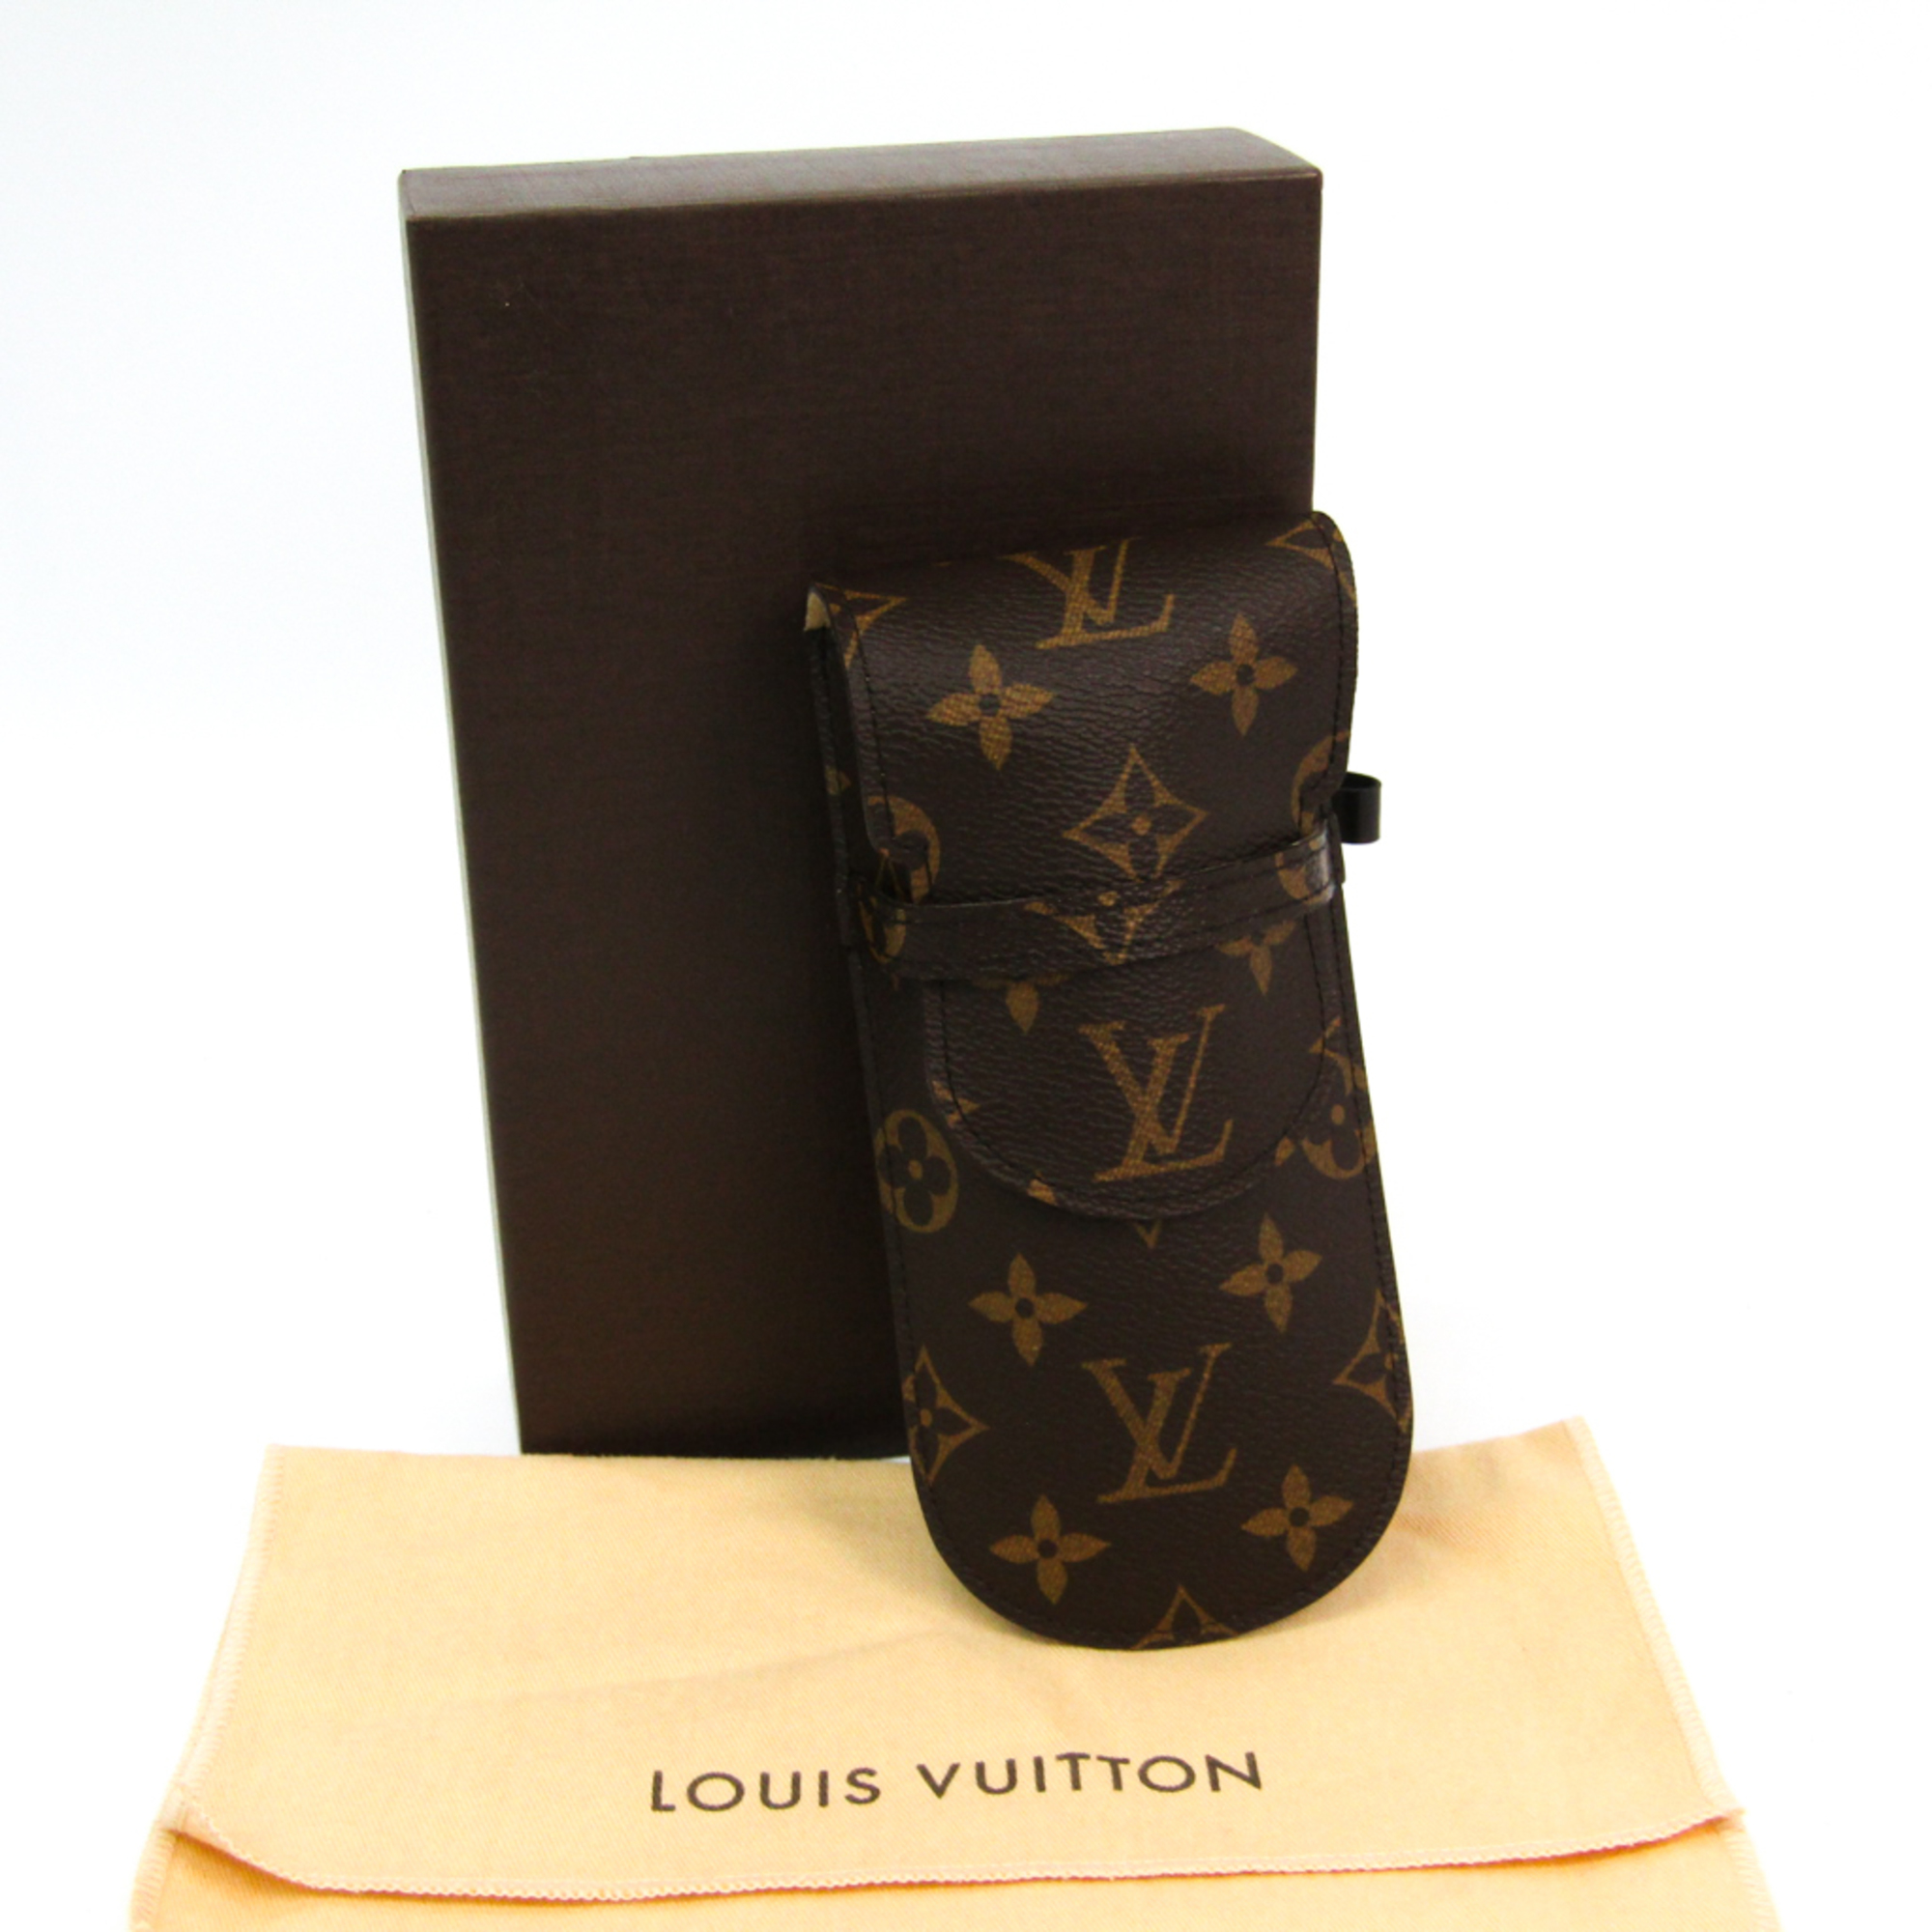 Louis Vuitton Monogram Soft Eyeglass Case (Monogram) Etui a lunettes rabat M62970